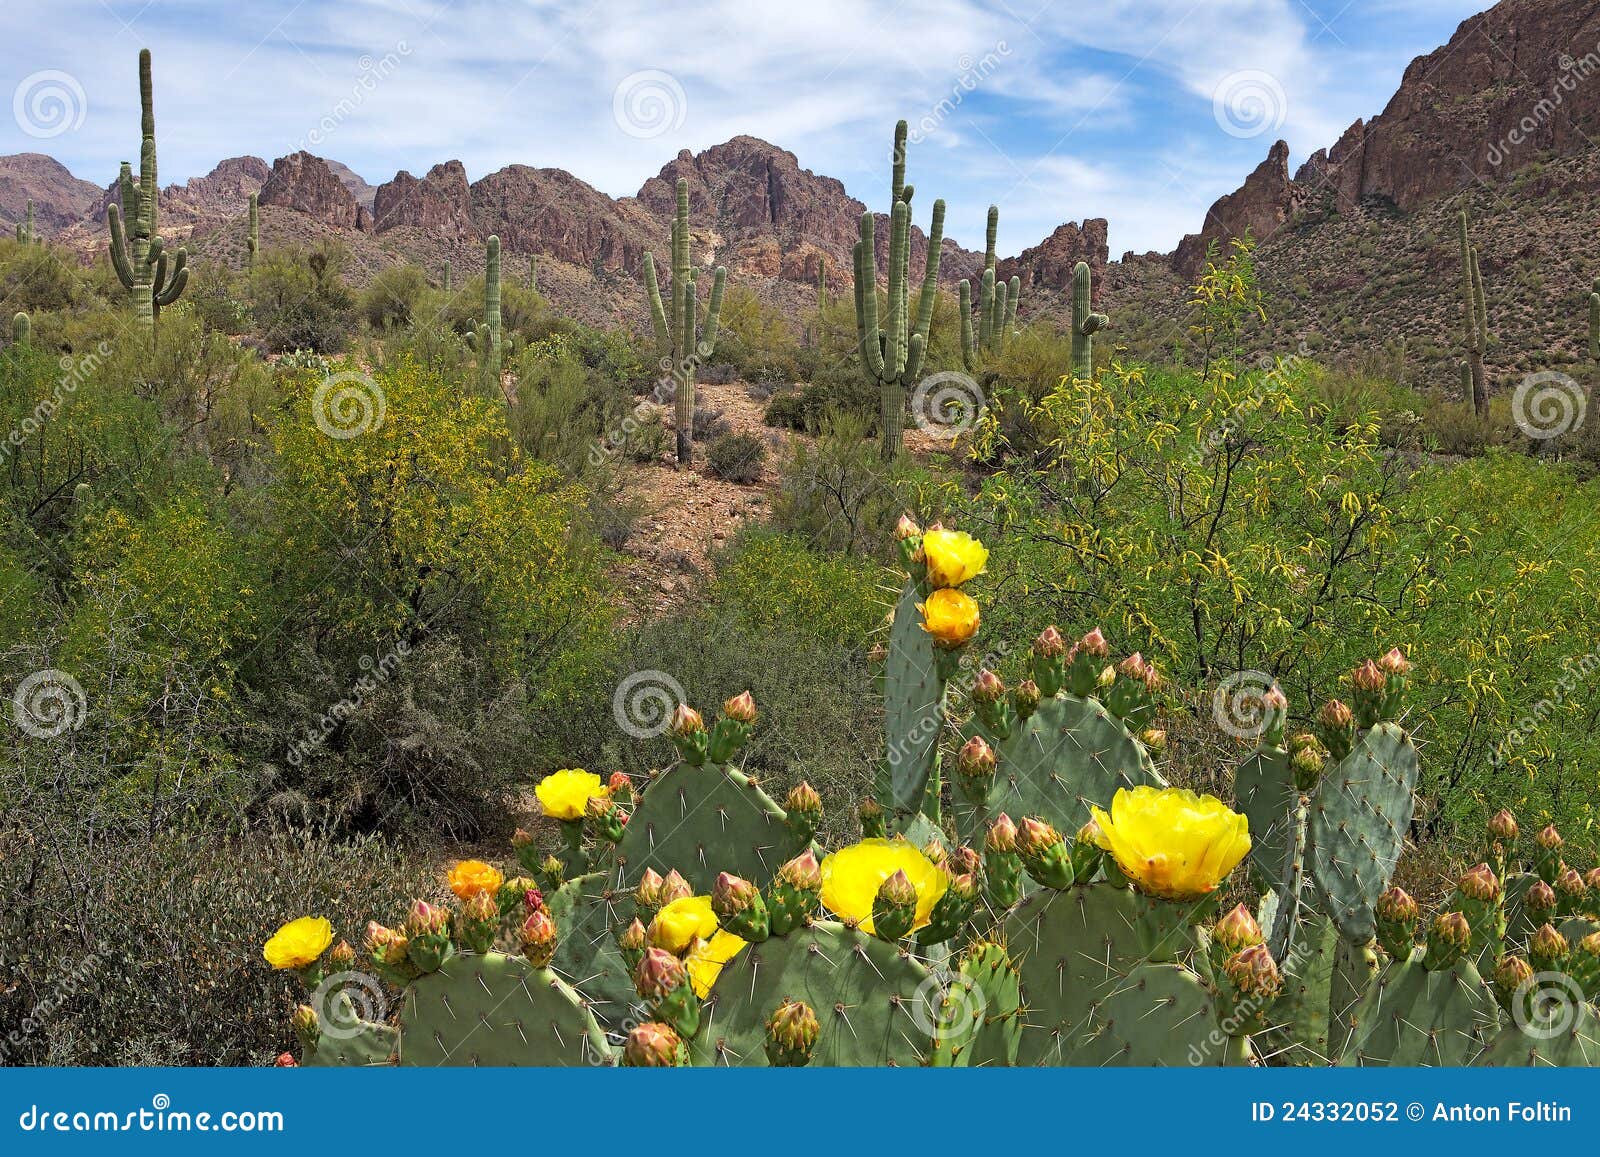 Blooming Desert stock photo. Image of paloverde, prickly - 24332052